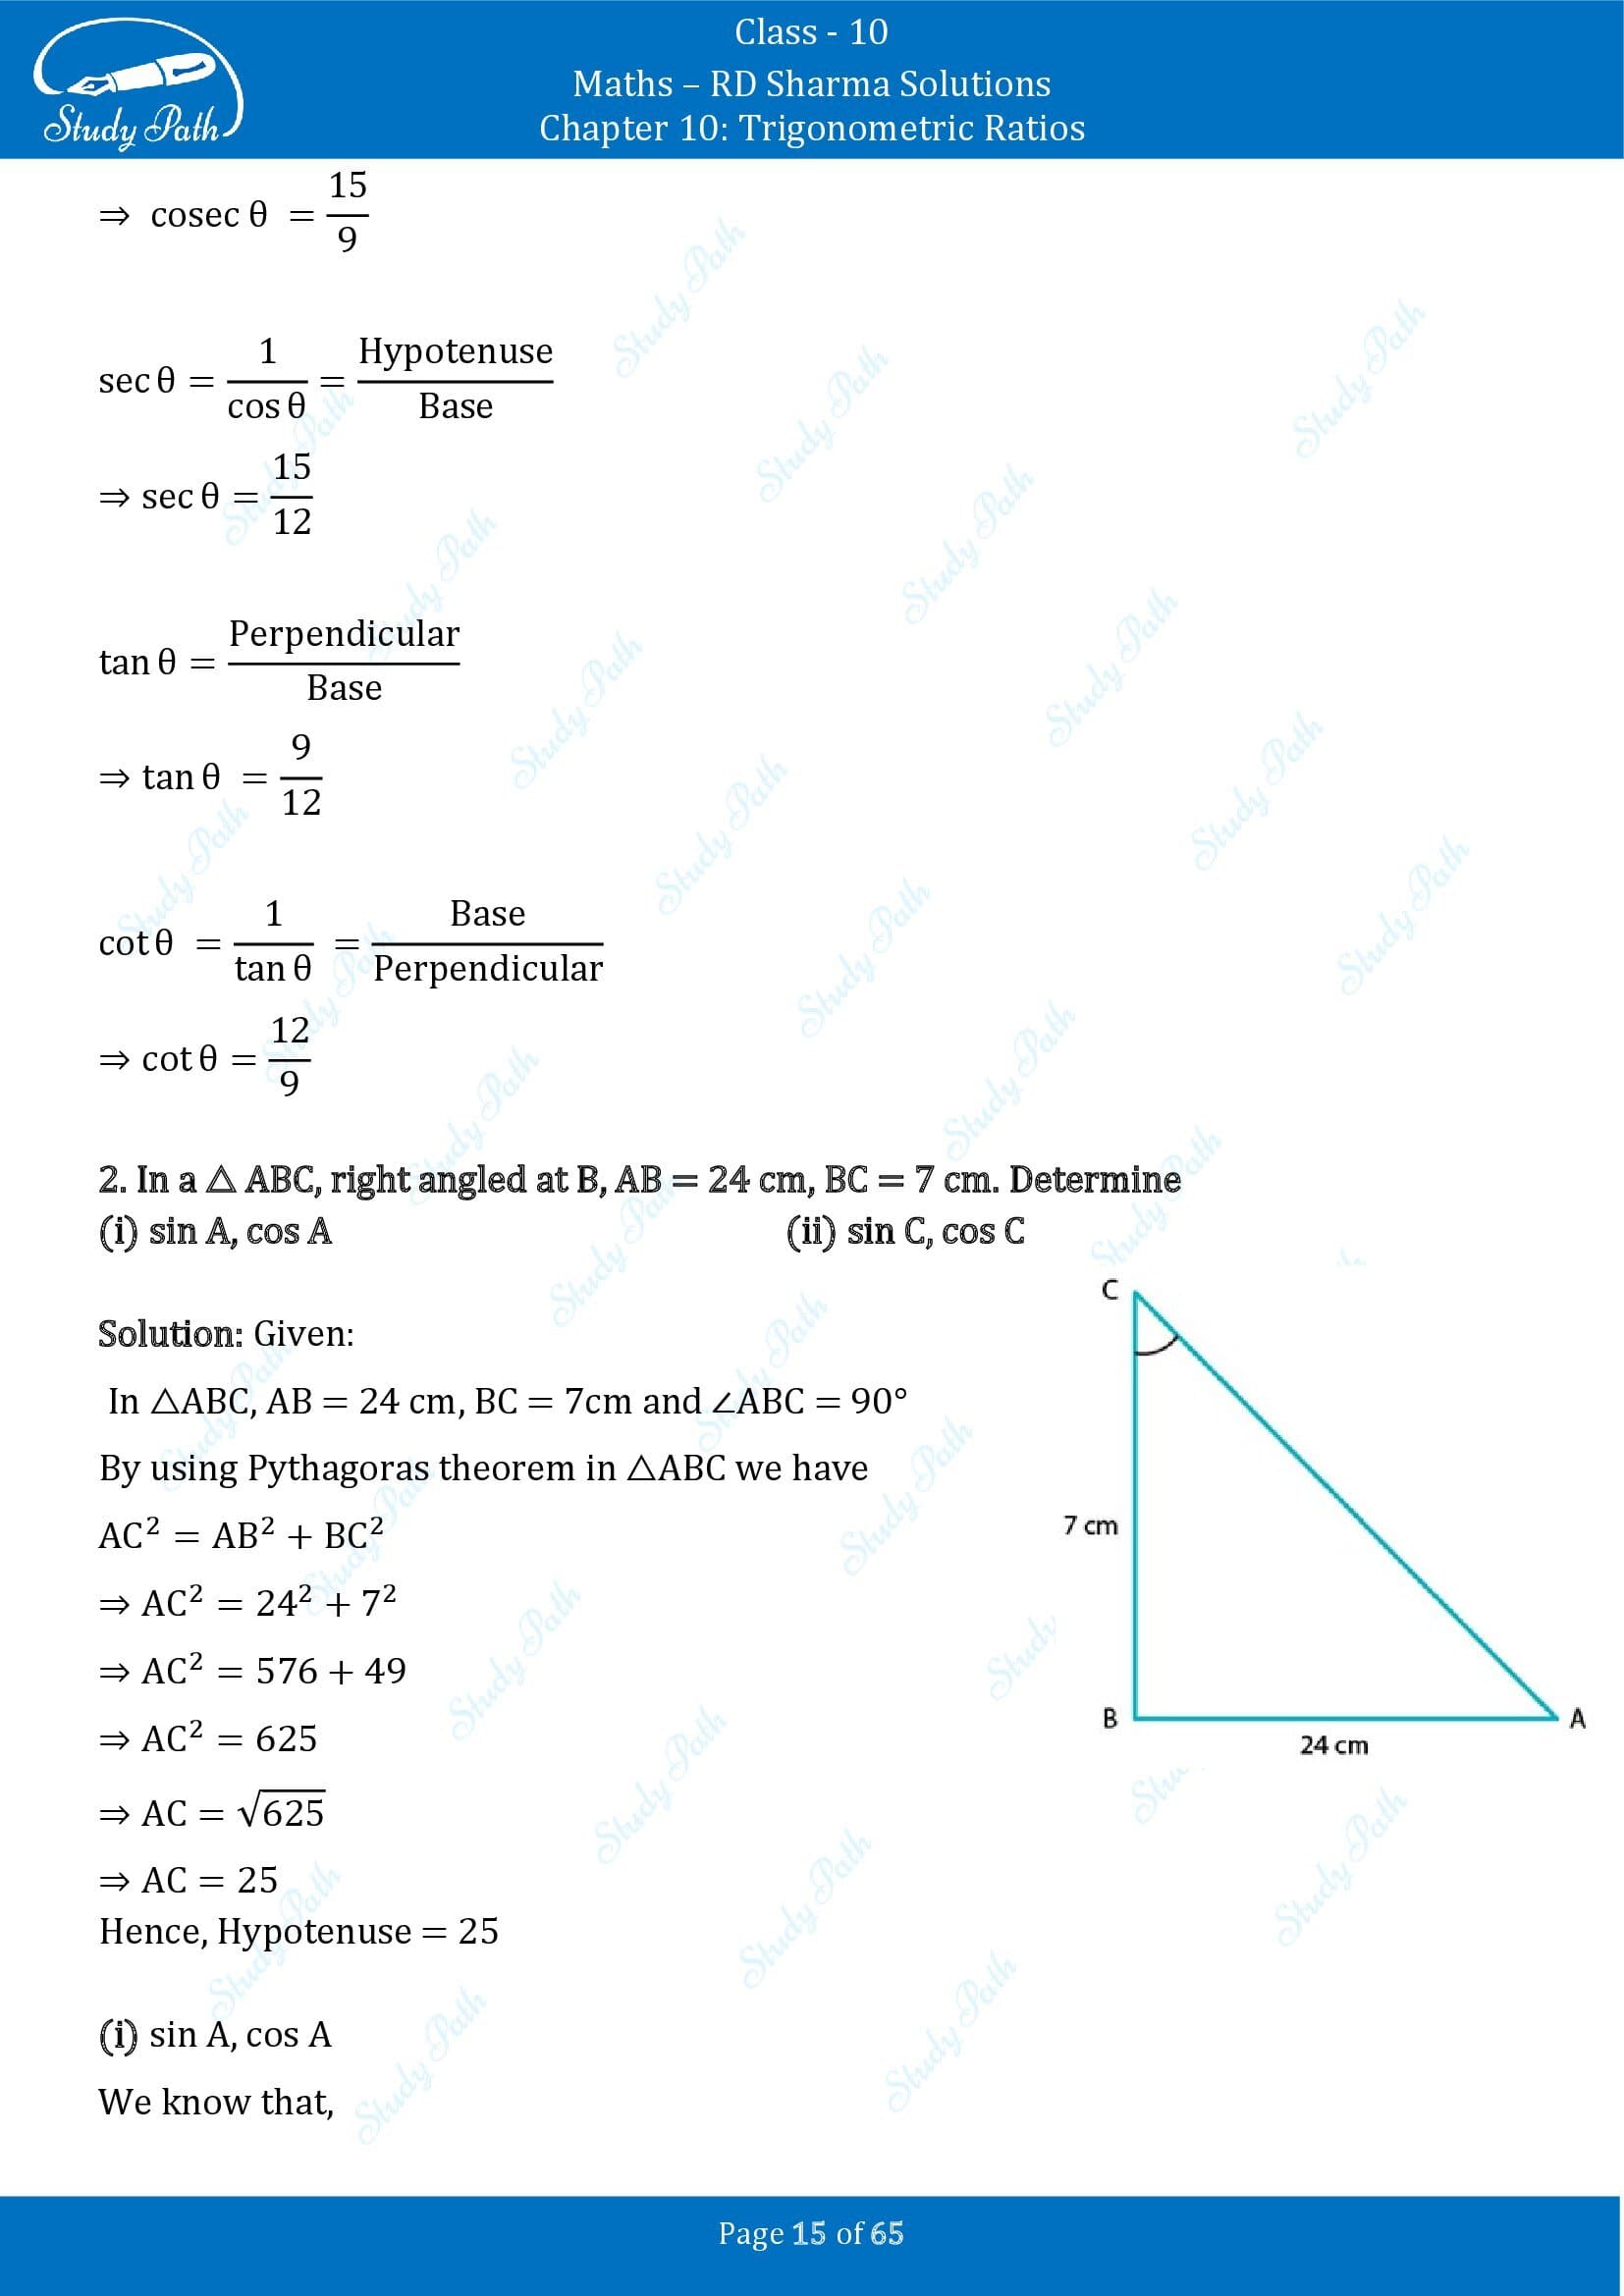 RD Sharma Solutions Class 10 Chapter 10 Trigonometric Ratios Exercise 10.1 00015